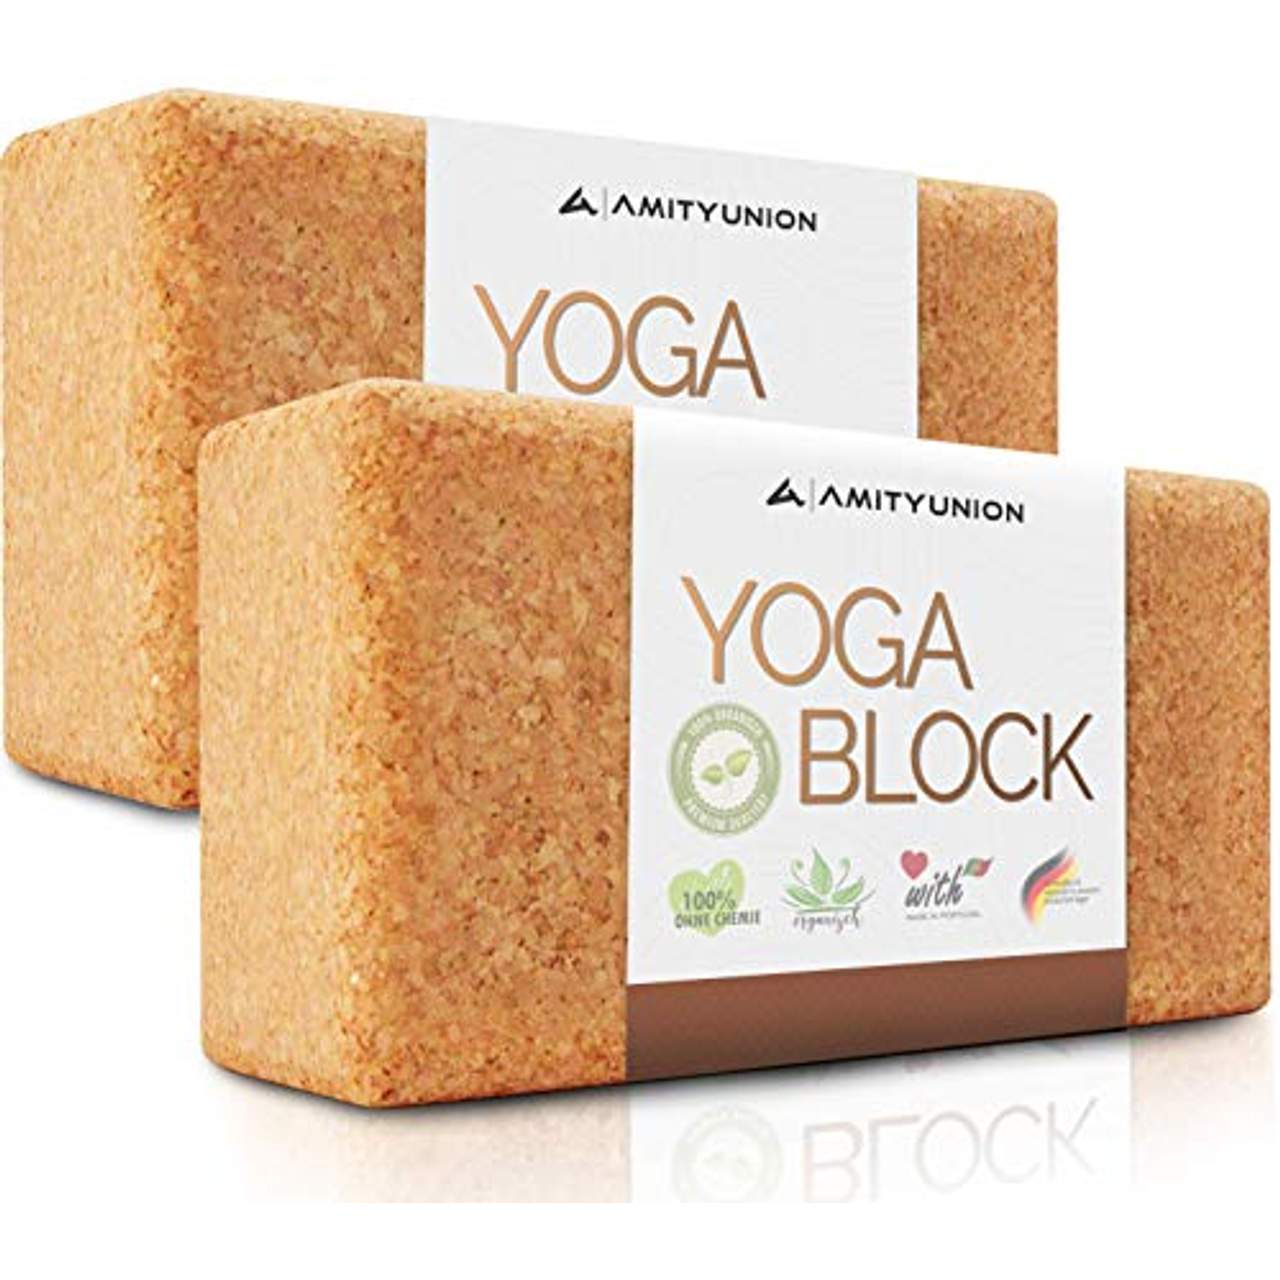 AMITYUNION Yogablock